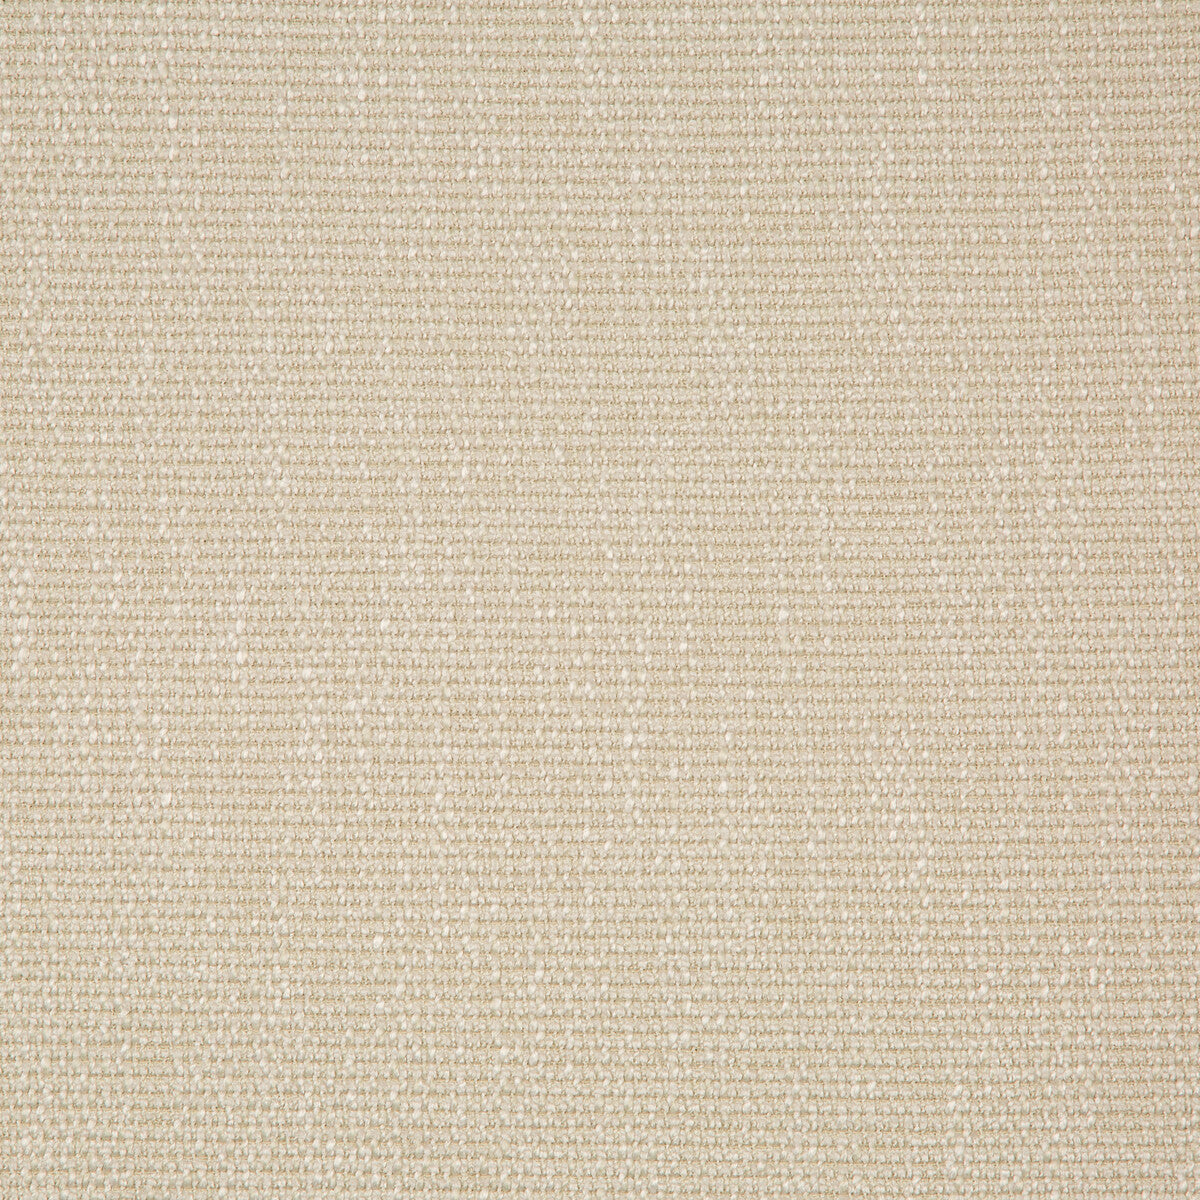 Kravet Smart fabric in 35943-116 color - pattern 35943.116.0 - by Kravet Smart in the Performance Kravetarmor collection